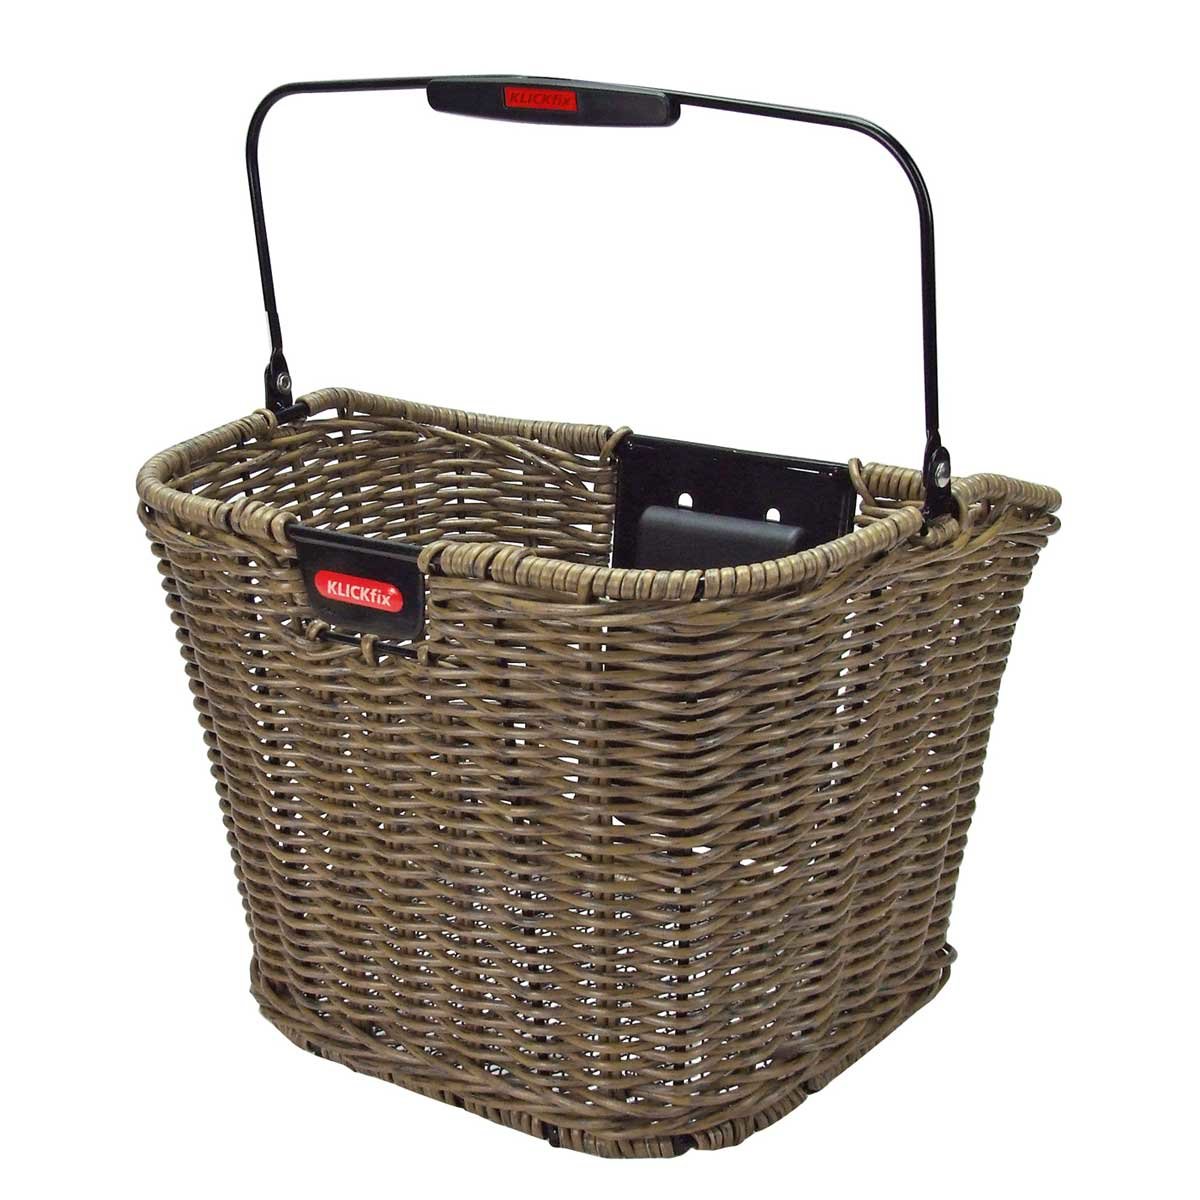 Rixen & Kaul Structura Retro Front Basket - Olive Brown - Rixen Bags -  basket rixenkaul bags structura retro front